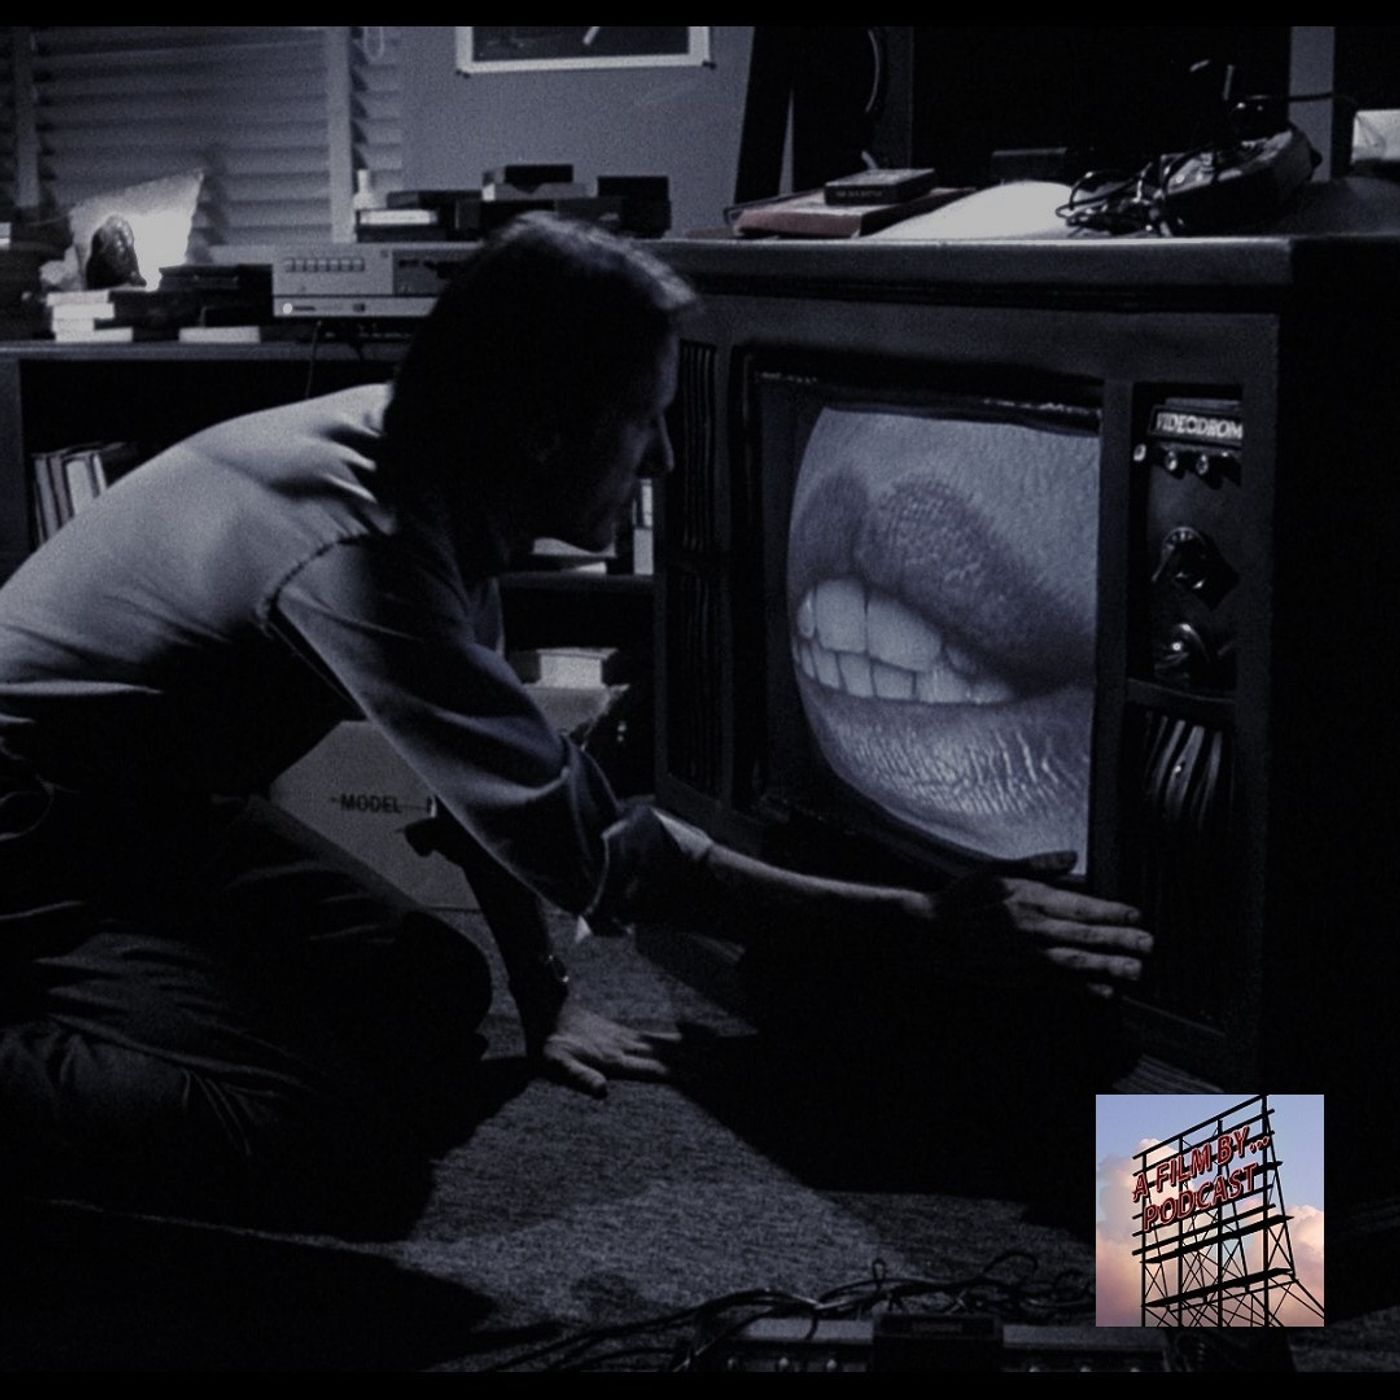 David Cronenberg - Videodrome Image